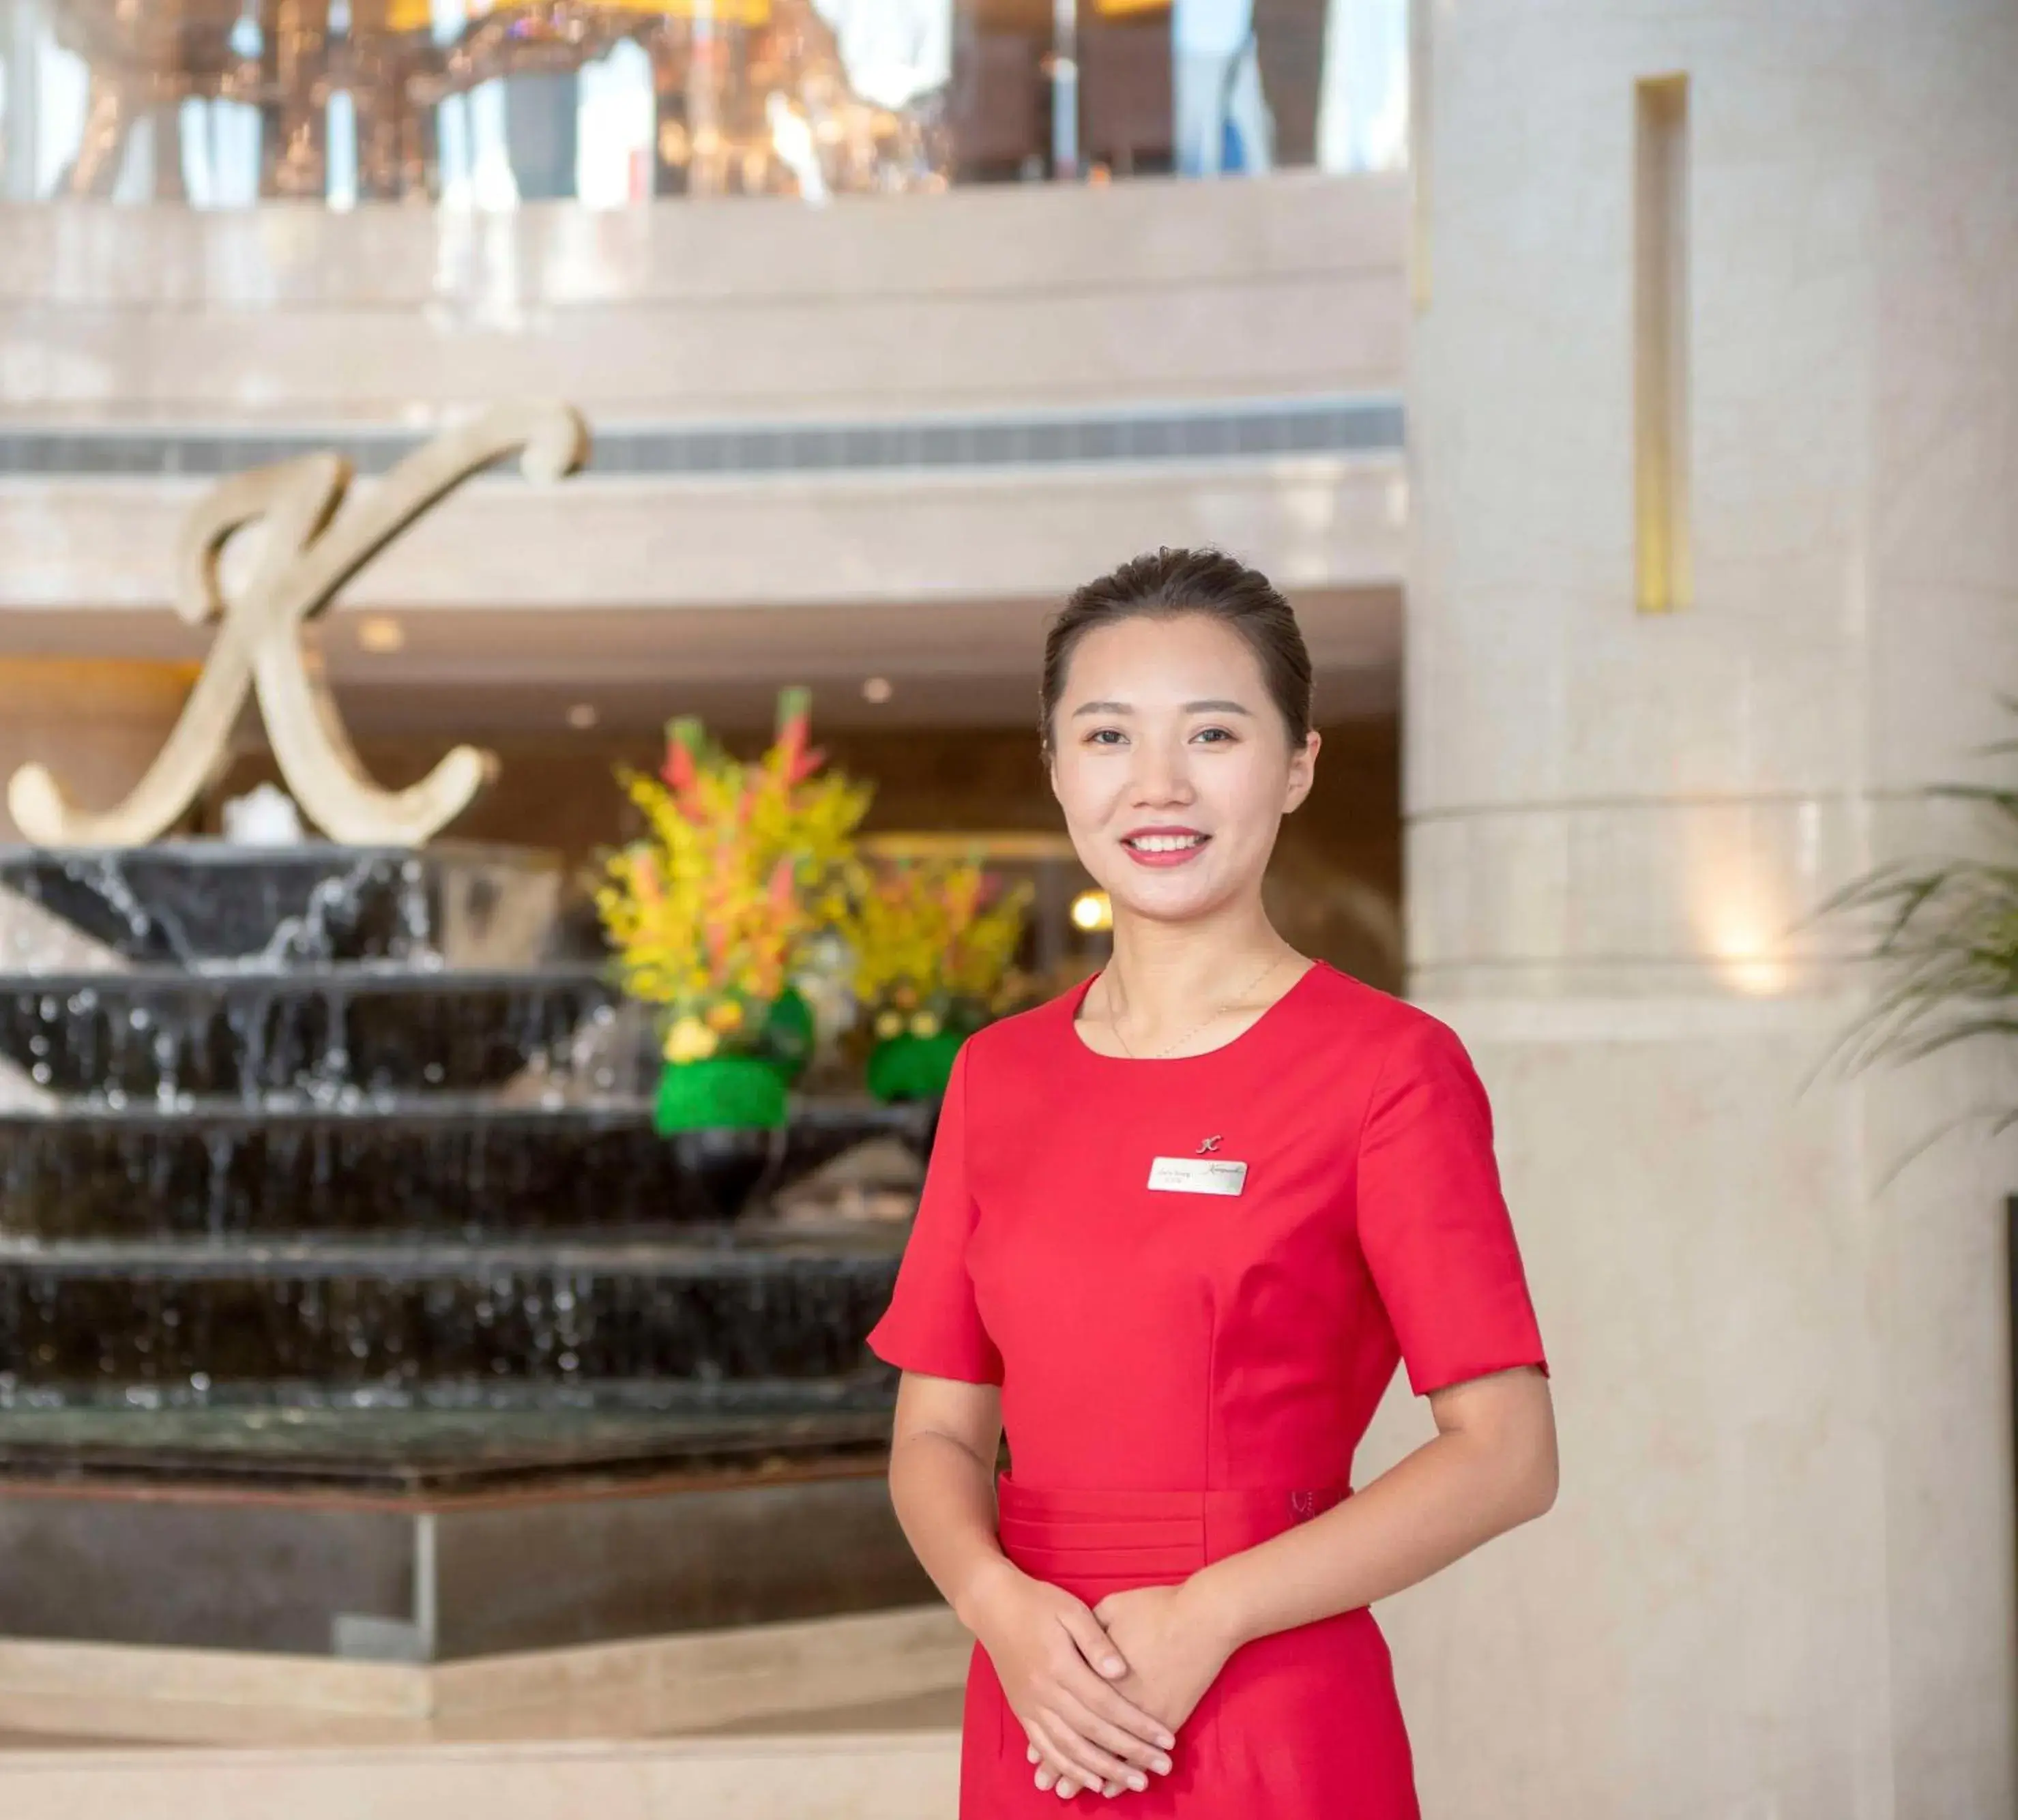 Lobby or reception in Kempinski Hotel Taiyuan